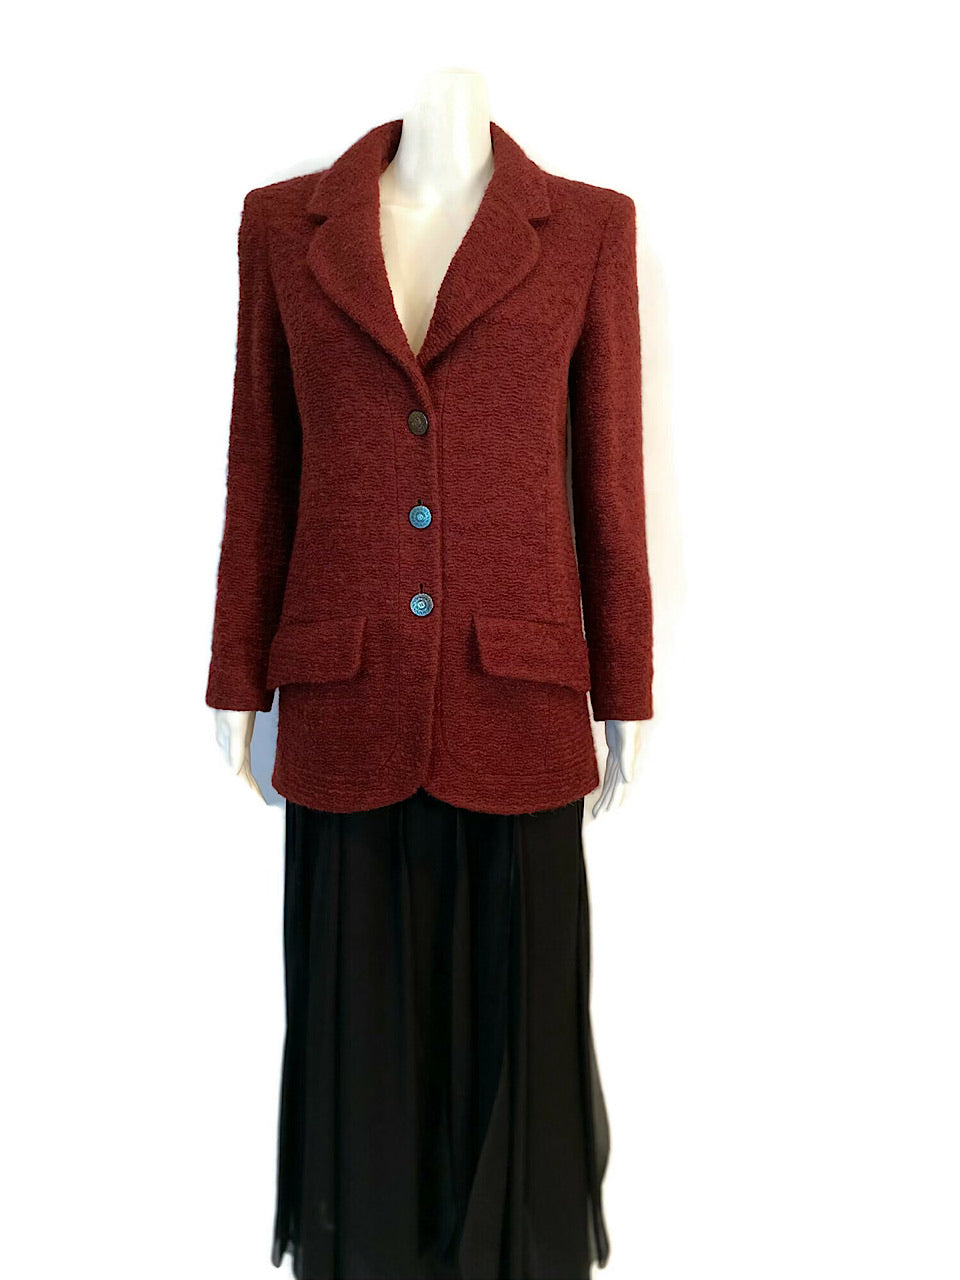 97a, 1997 Fall Vintage Chanel Mahogany Rust Boucle Blazer Jacket FR 38